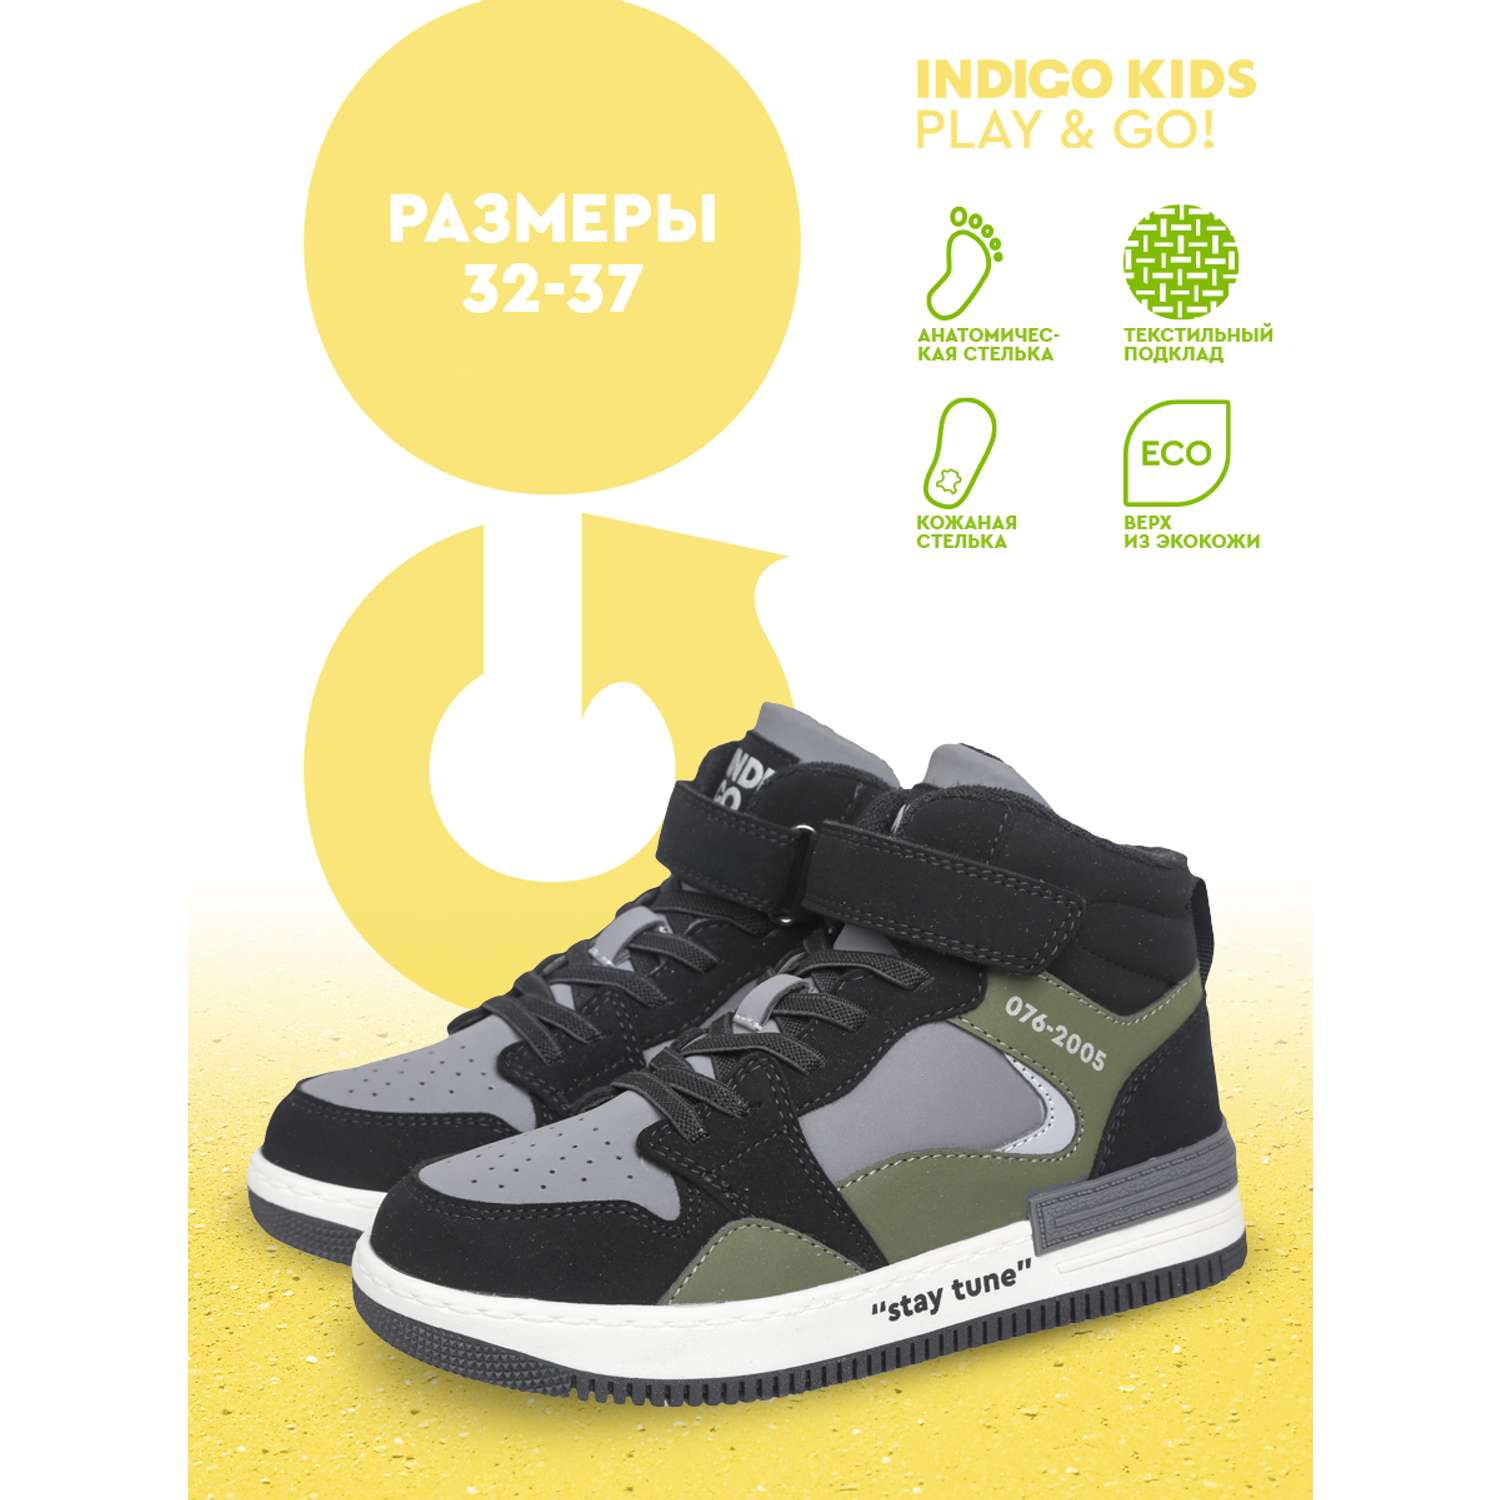 Ботинки Indigo kids 53-0012A - фото 7